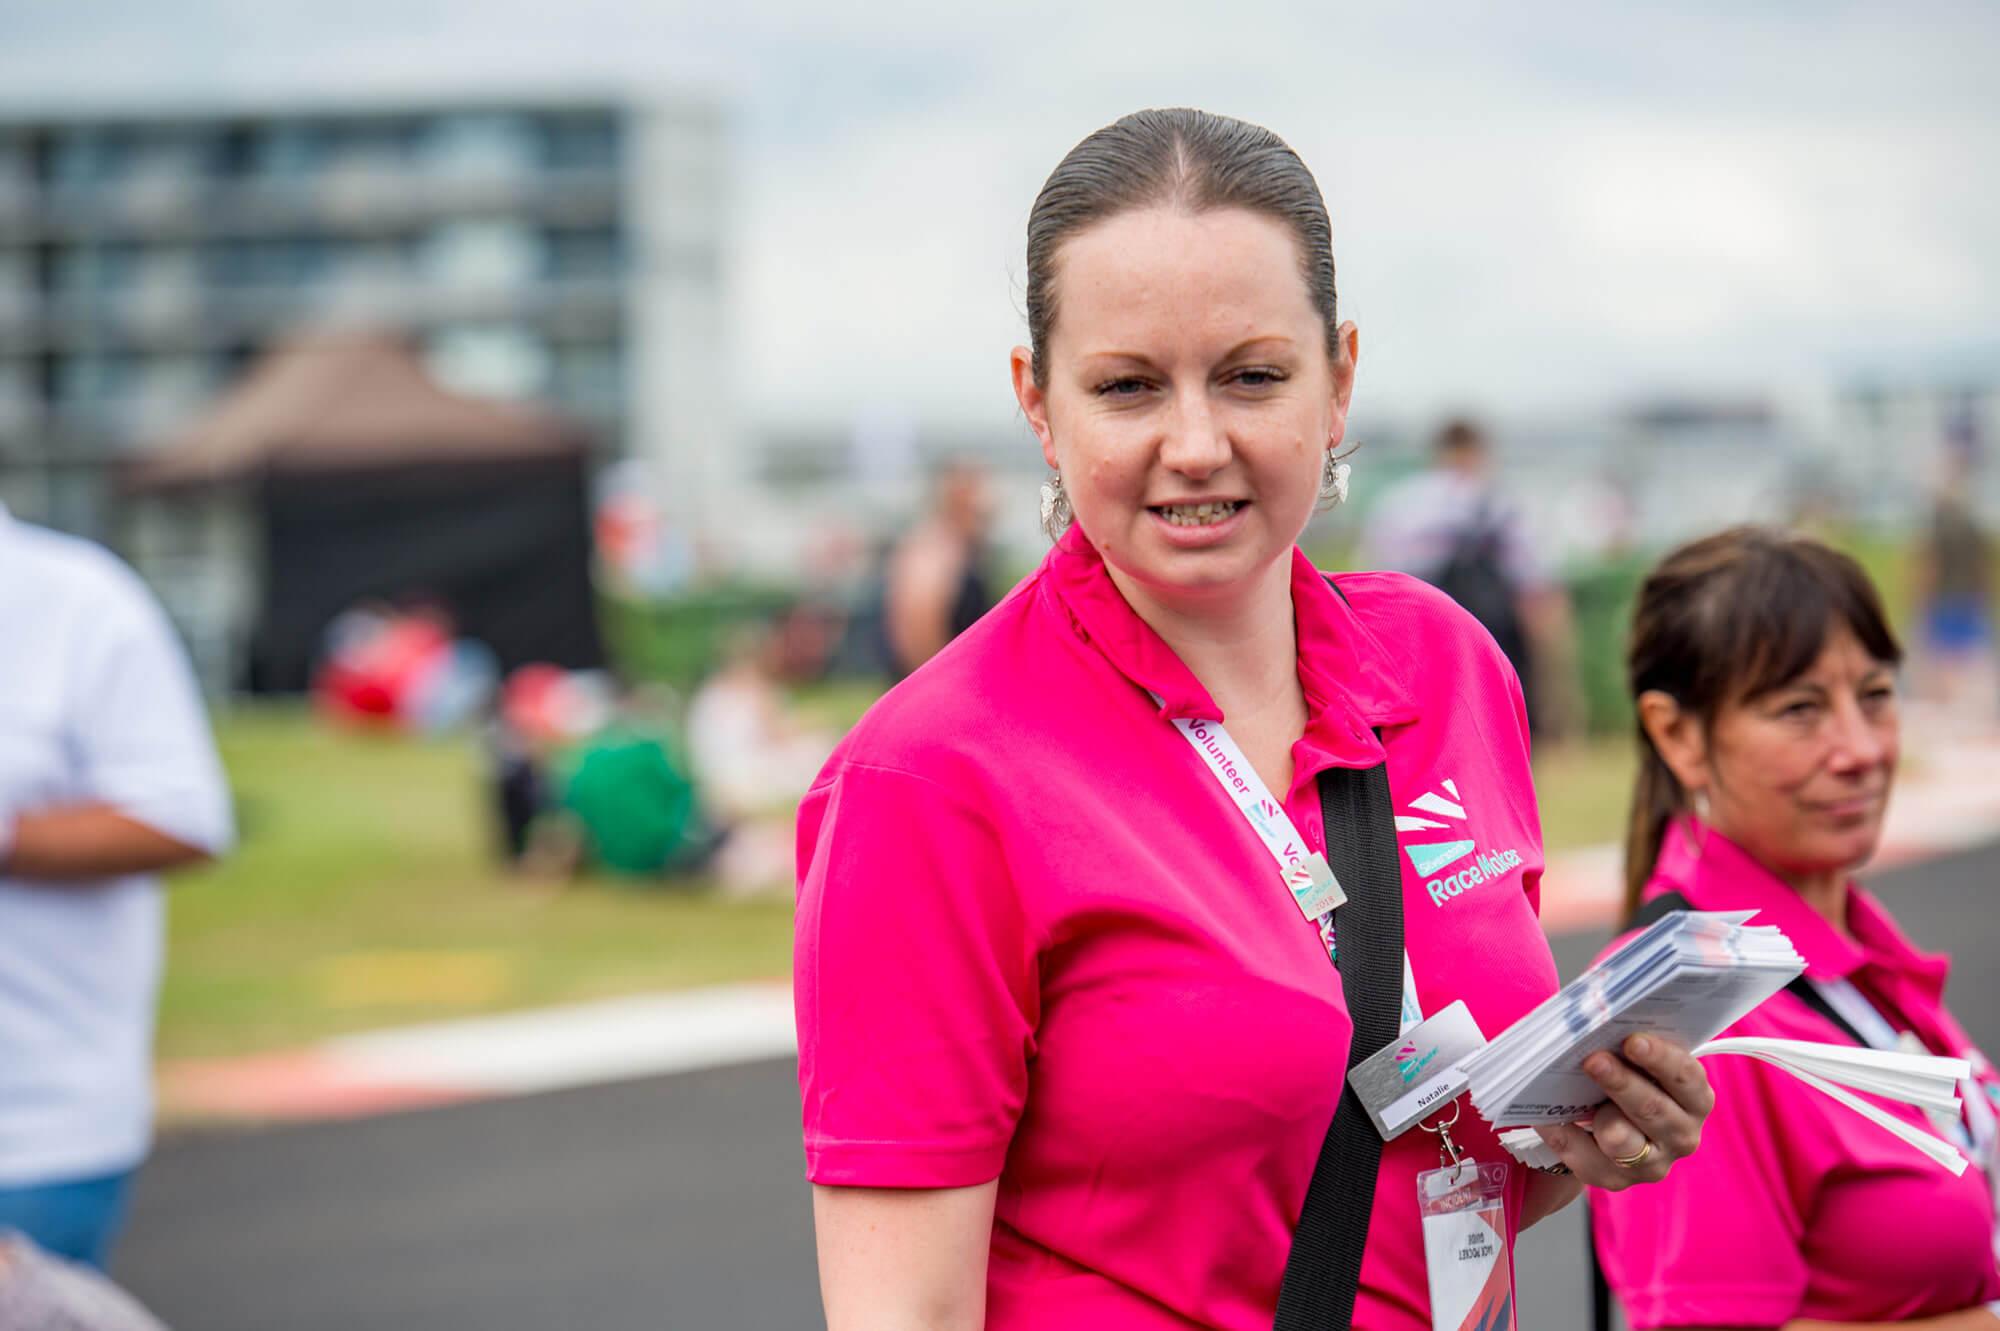 Race maker assistant helps at Formula 1